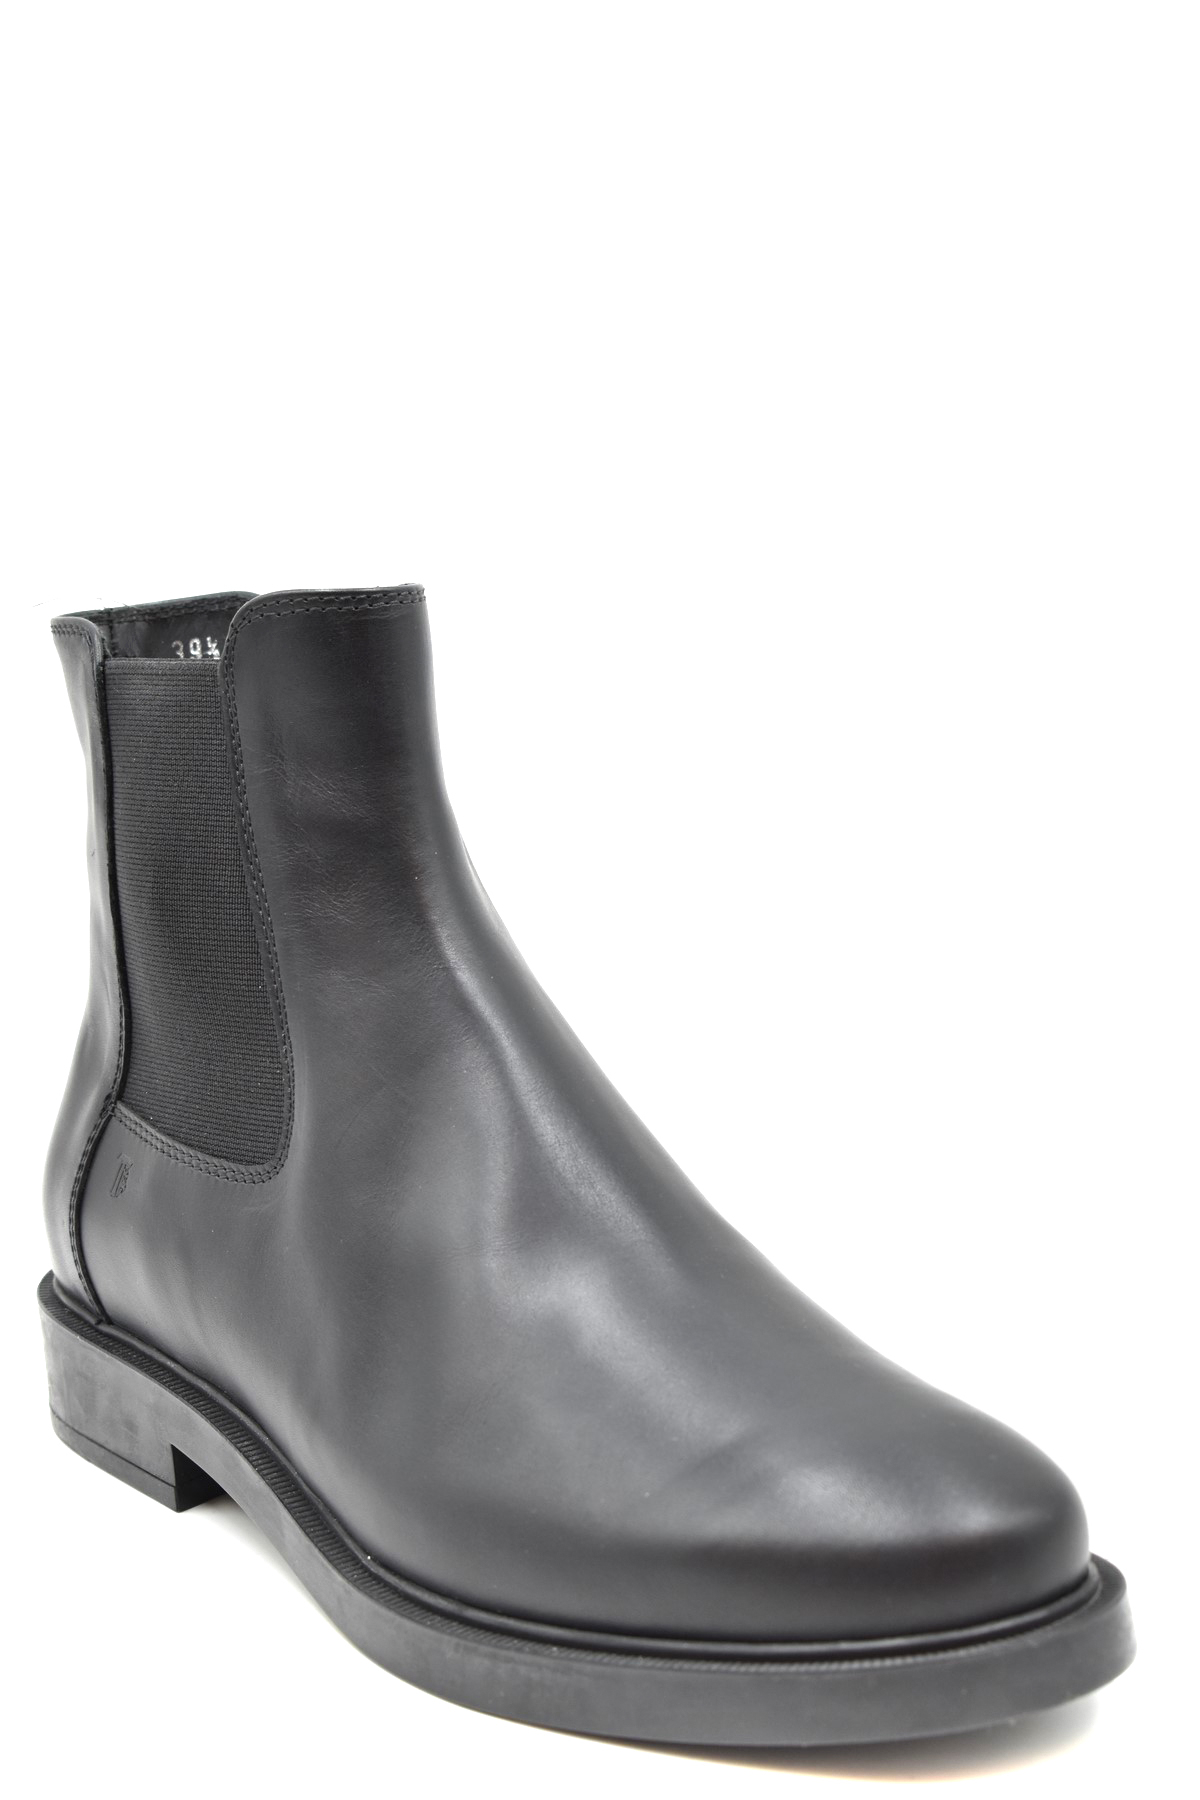 TOD'S Women's Shoes Ankle Boots Black Leather NIB Authentic 39.5 EU 40 ...